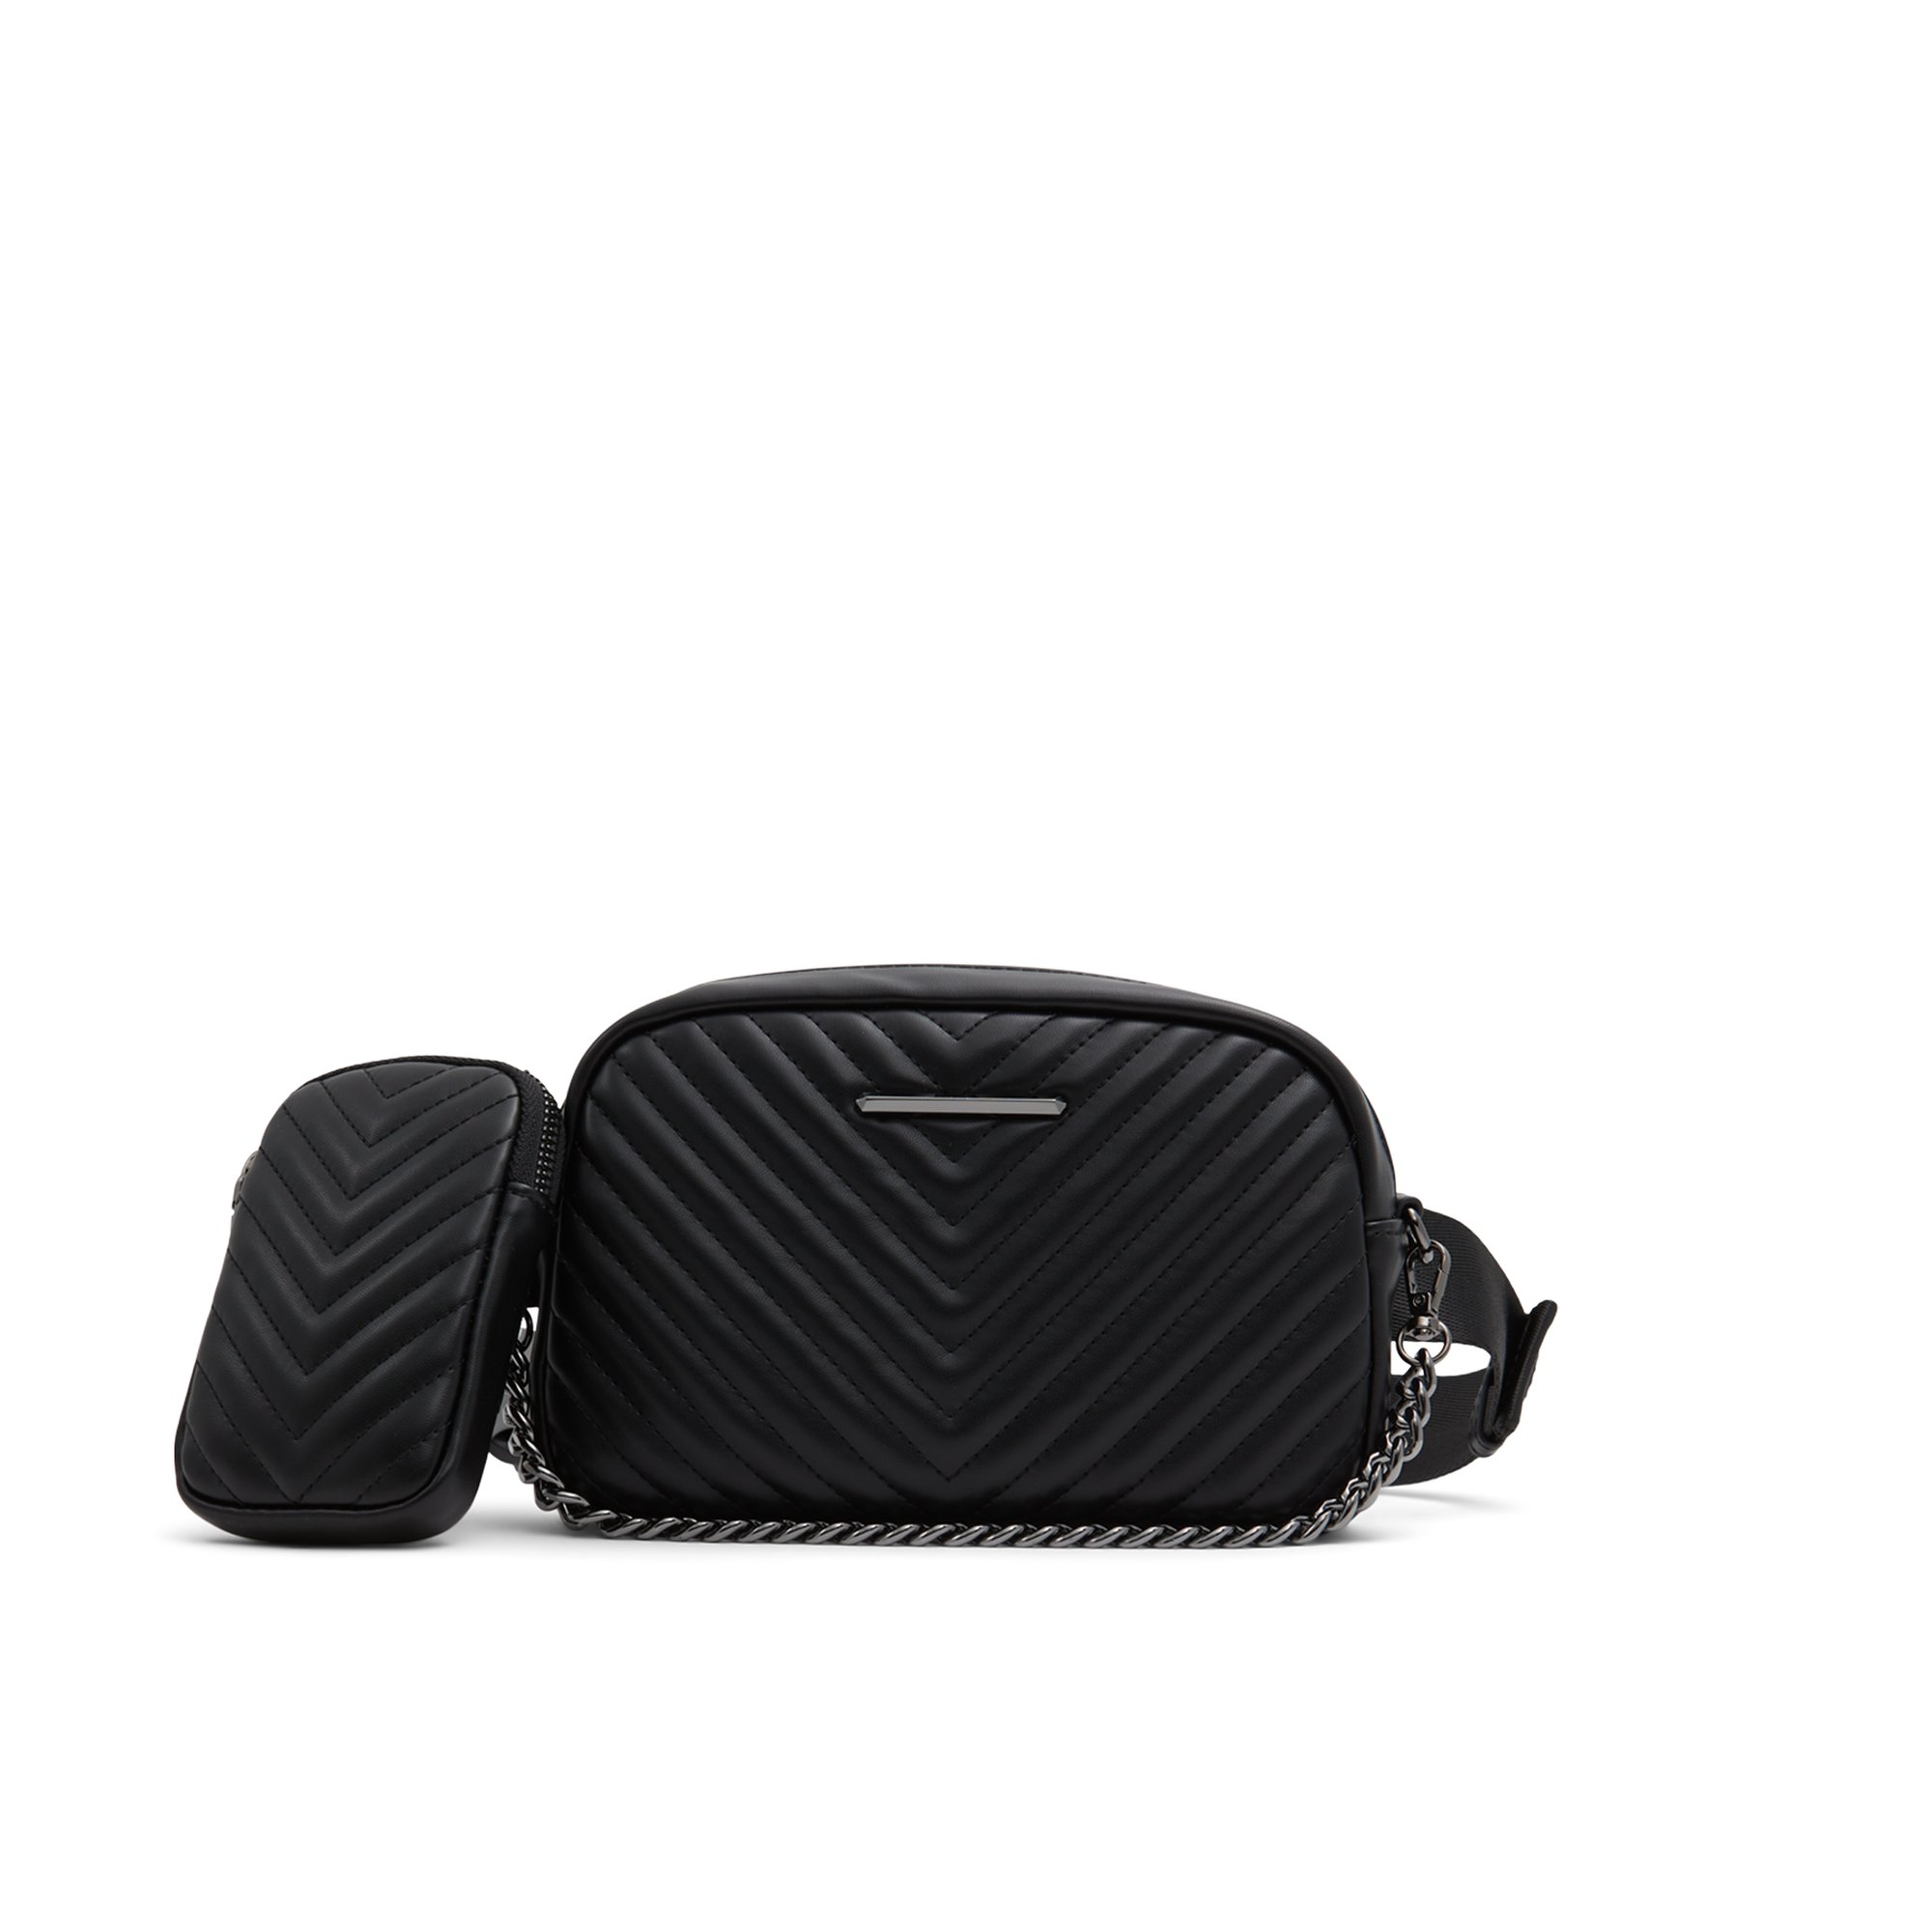 ALDO Zinkax - Women's Handbags Backpacks - Black